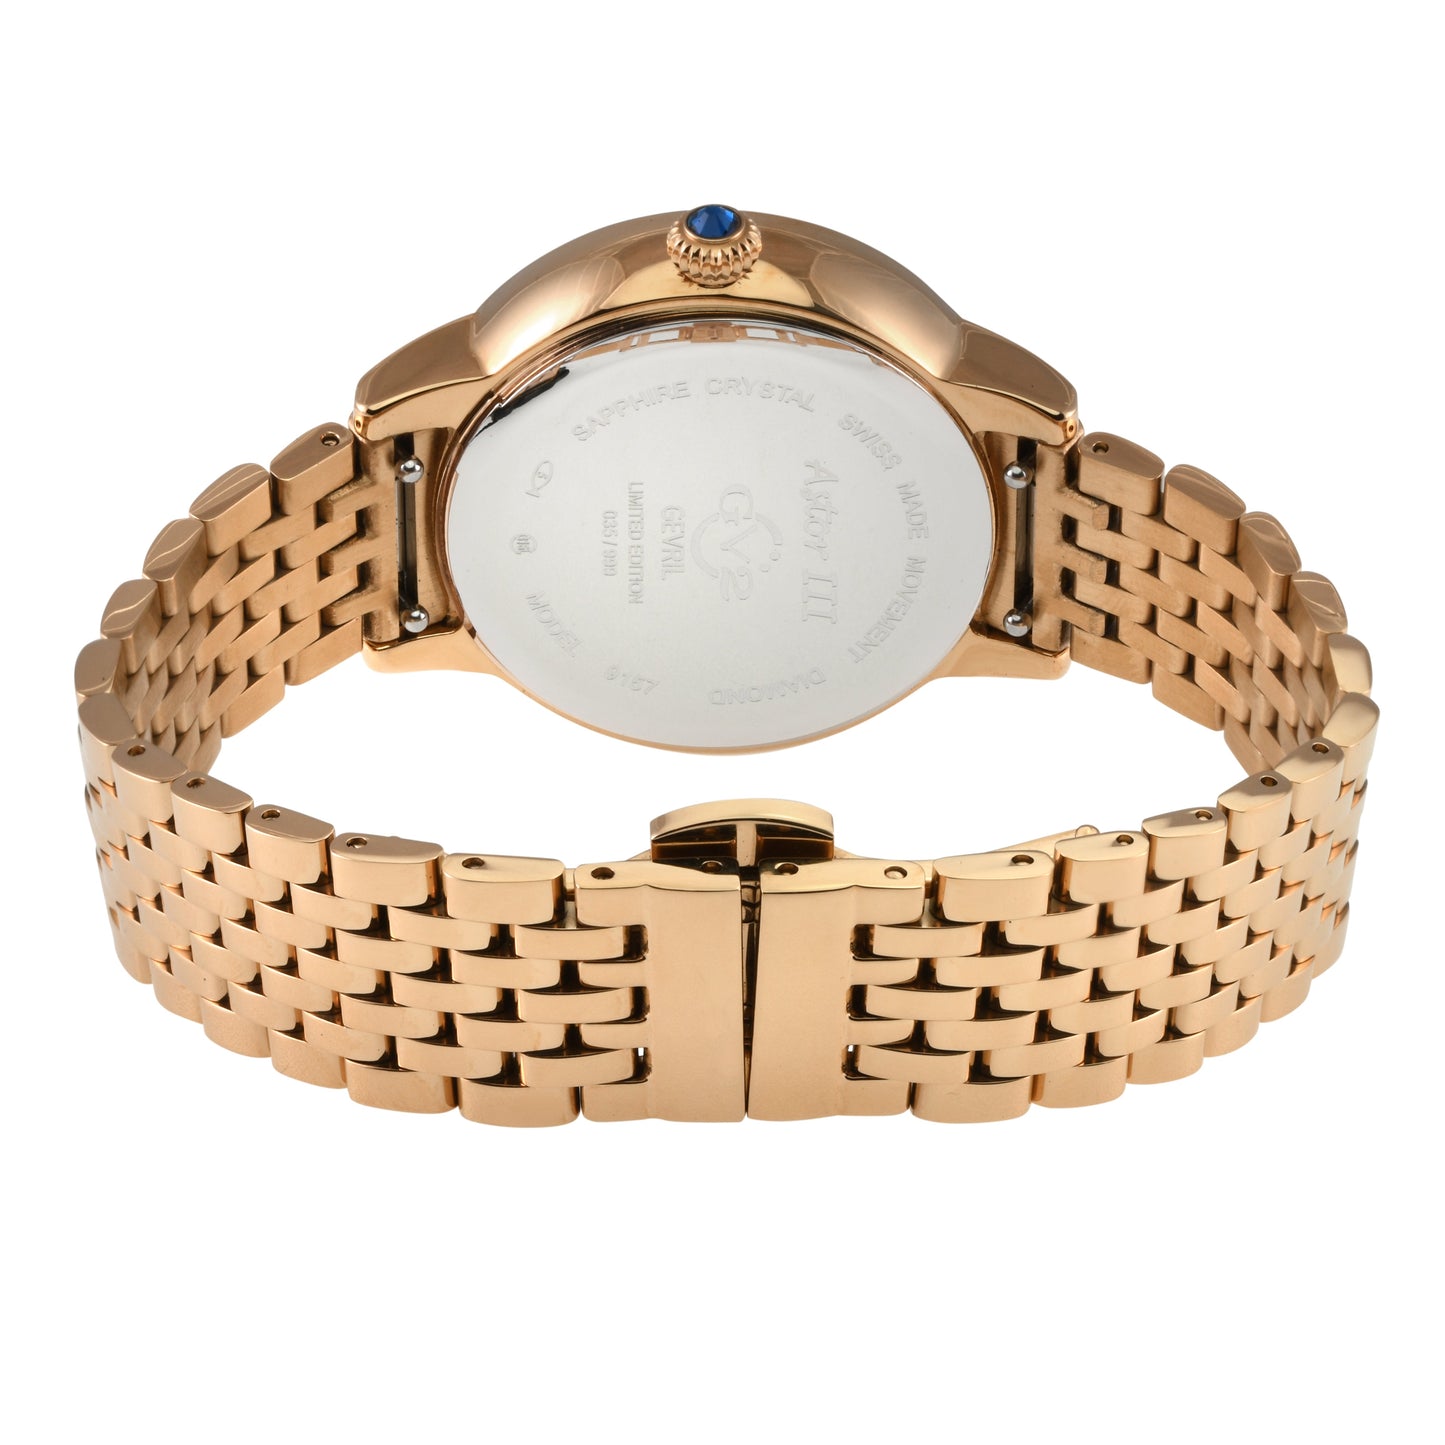 Gevril-Luxury-Swiss-Watches-GV2 Astor III Diamond-9151B